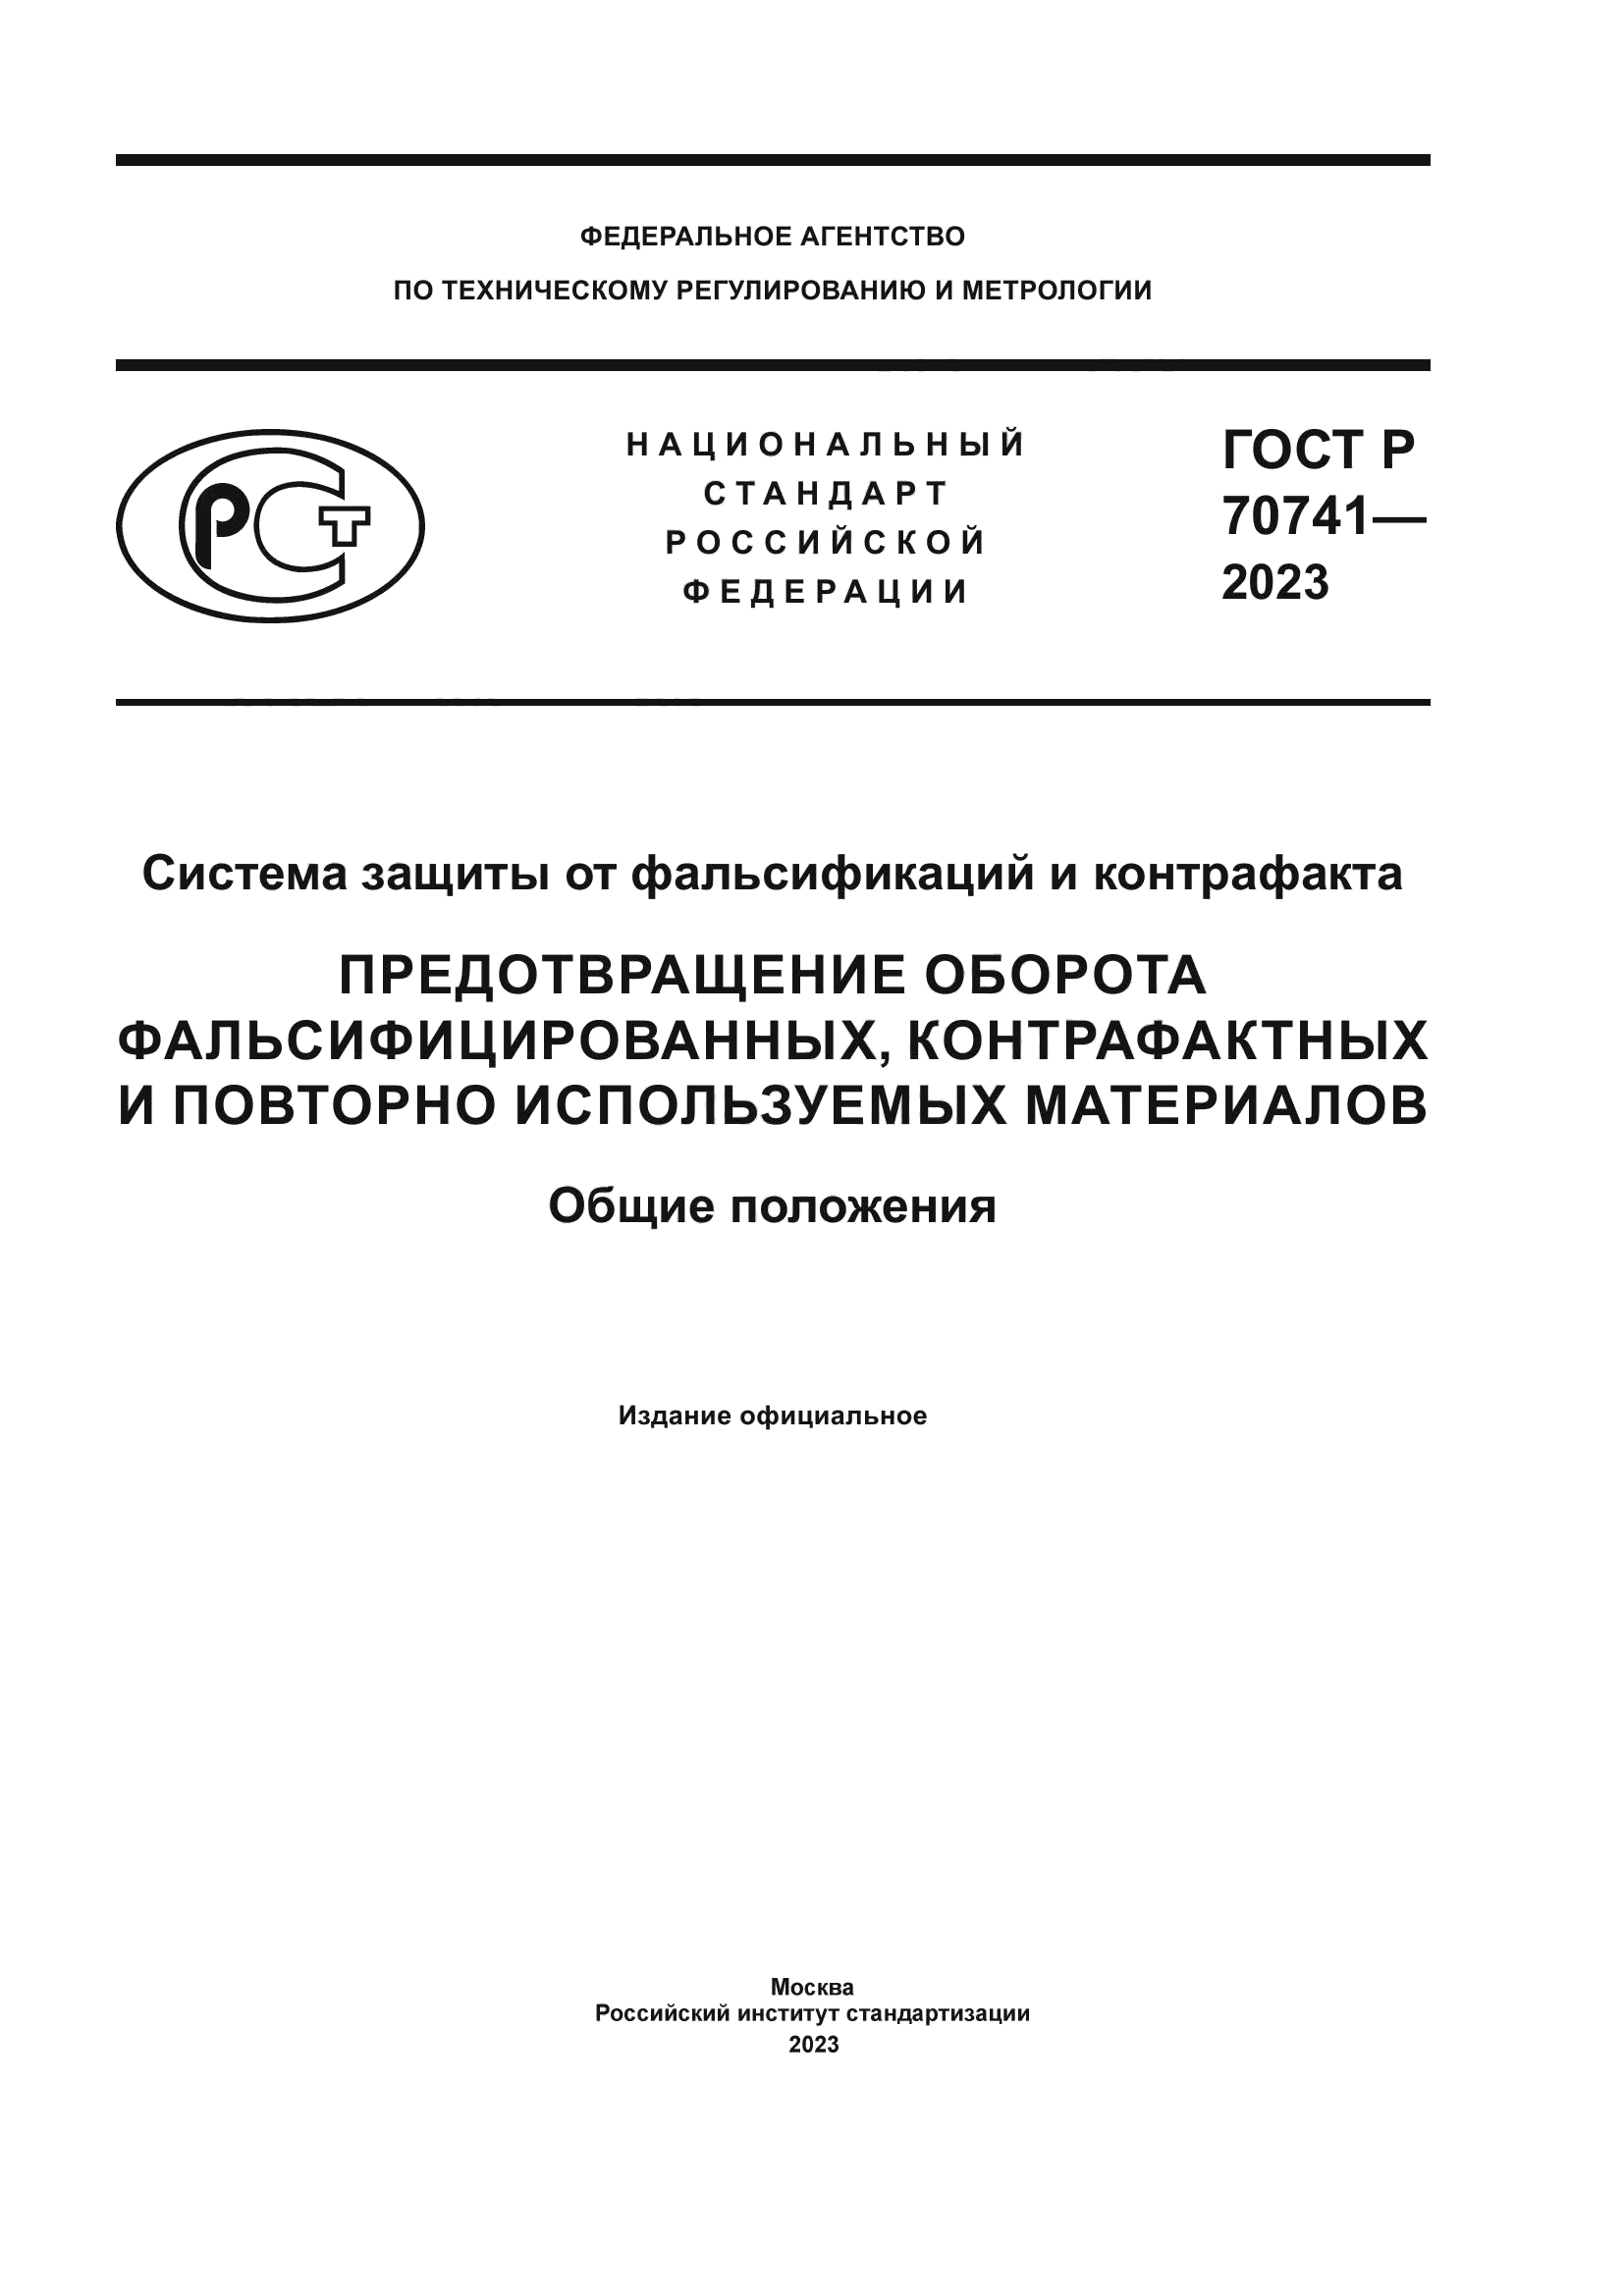 ГОСТ Р 70741-2023